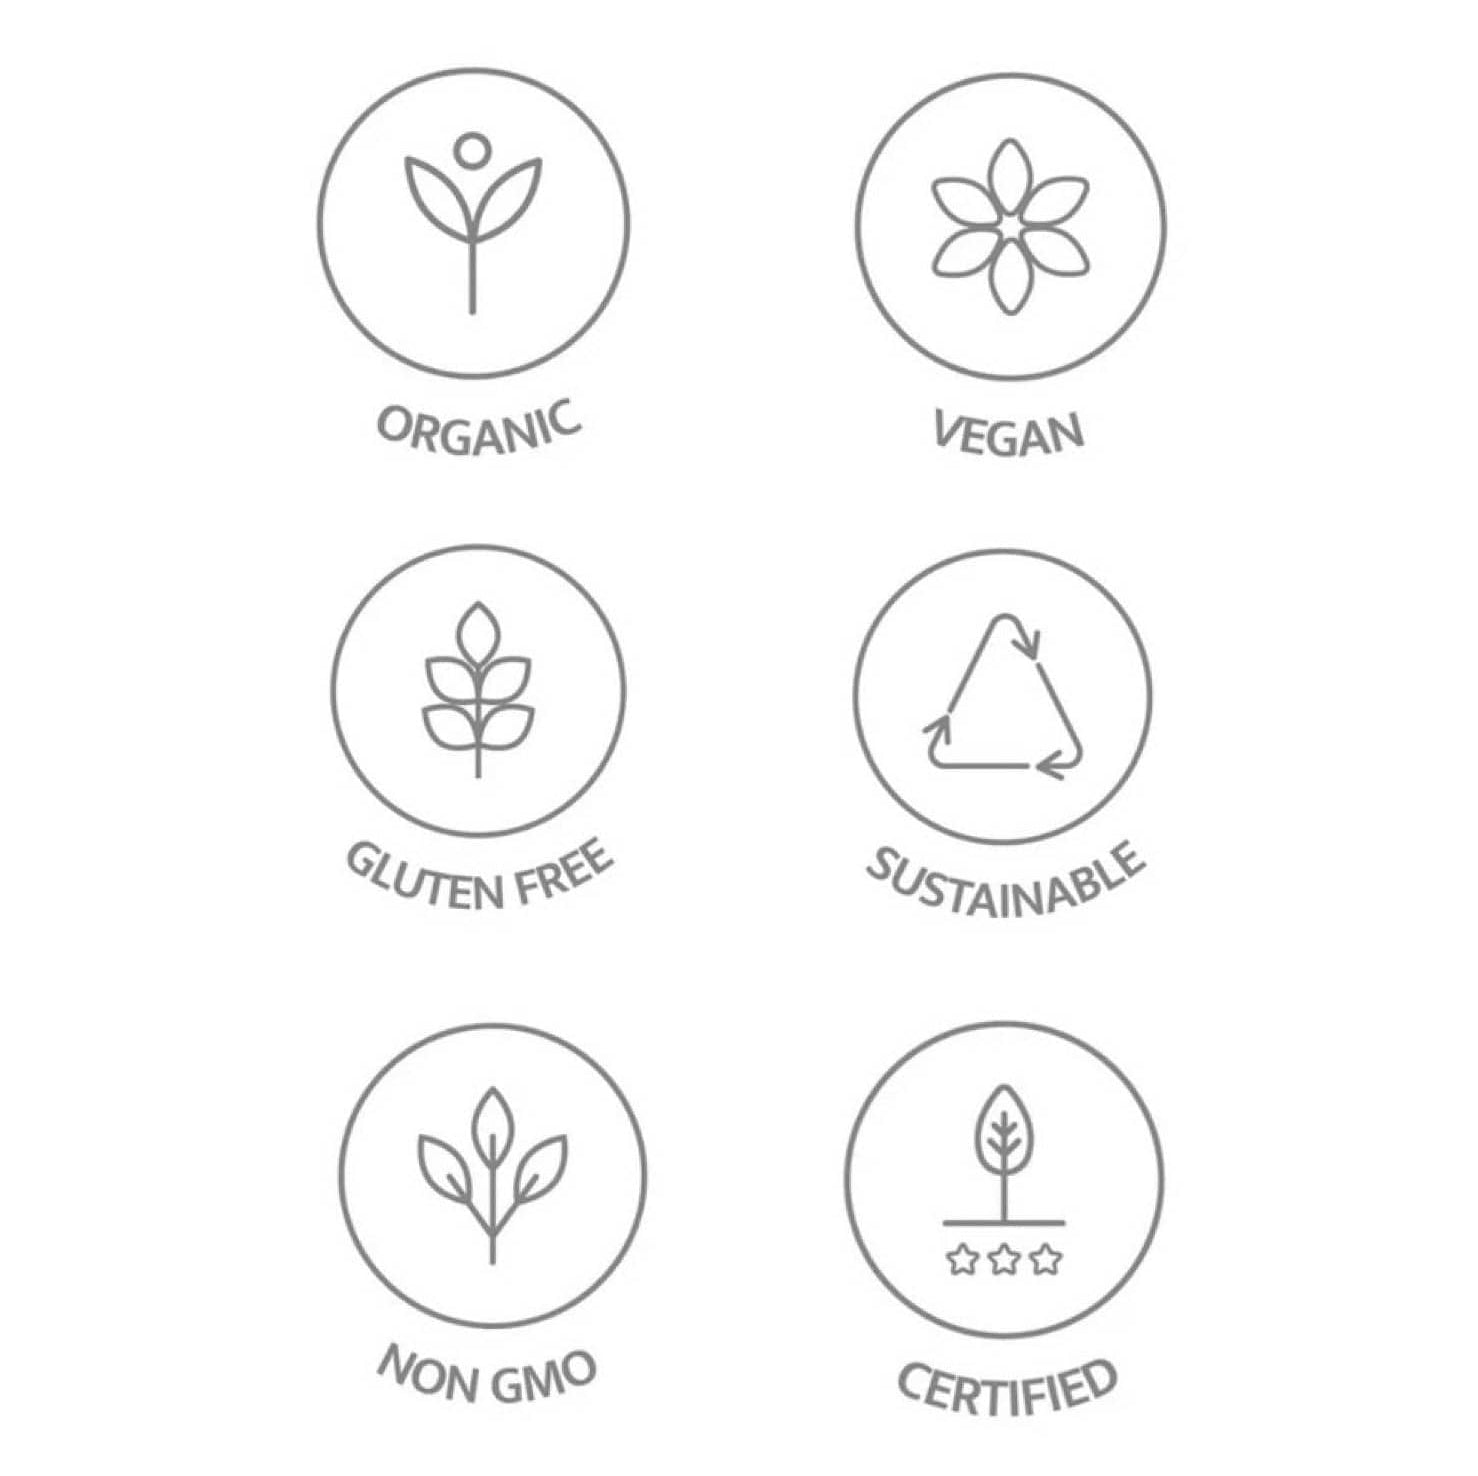 Organic ‘Clarity’ Multi-Mushroom Capsules Wellness Supplements North Spore 